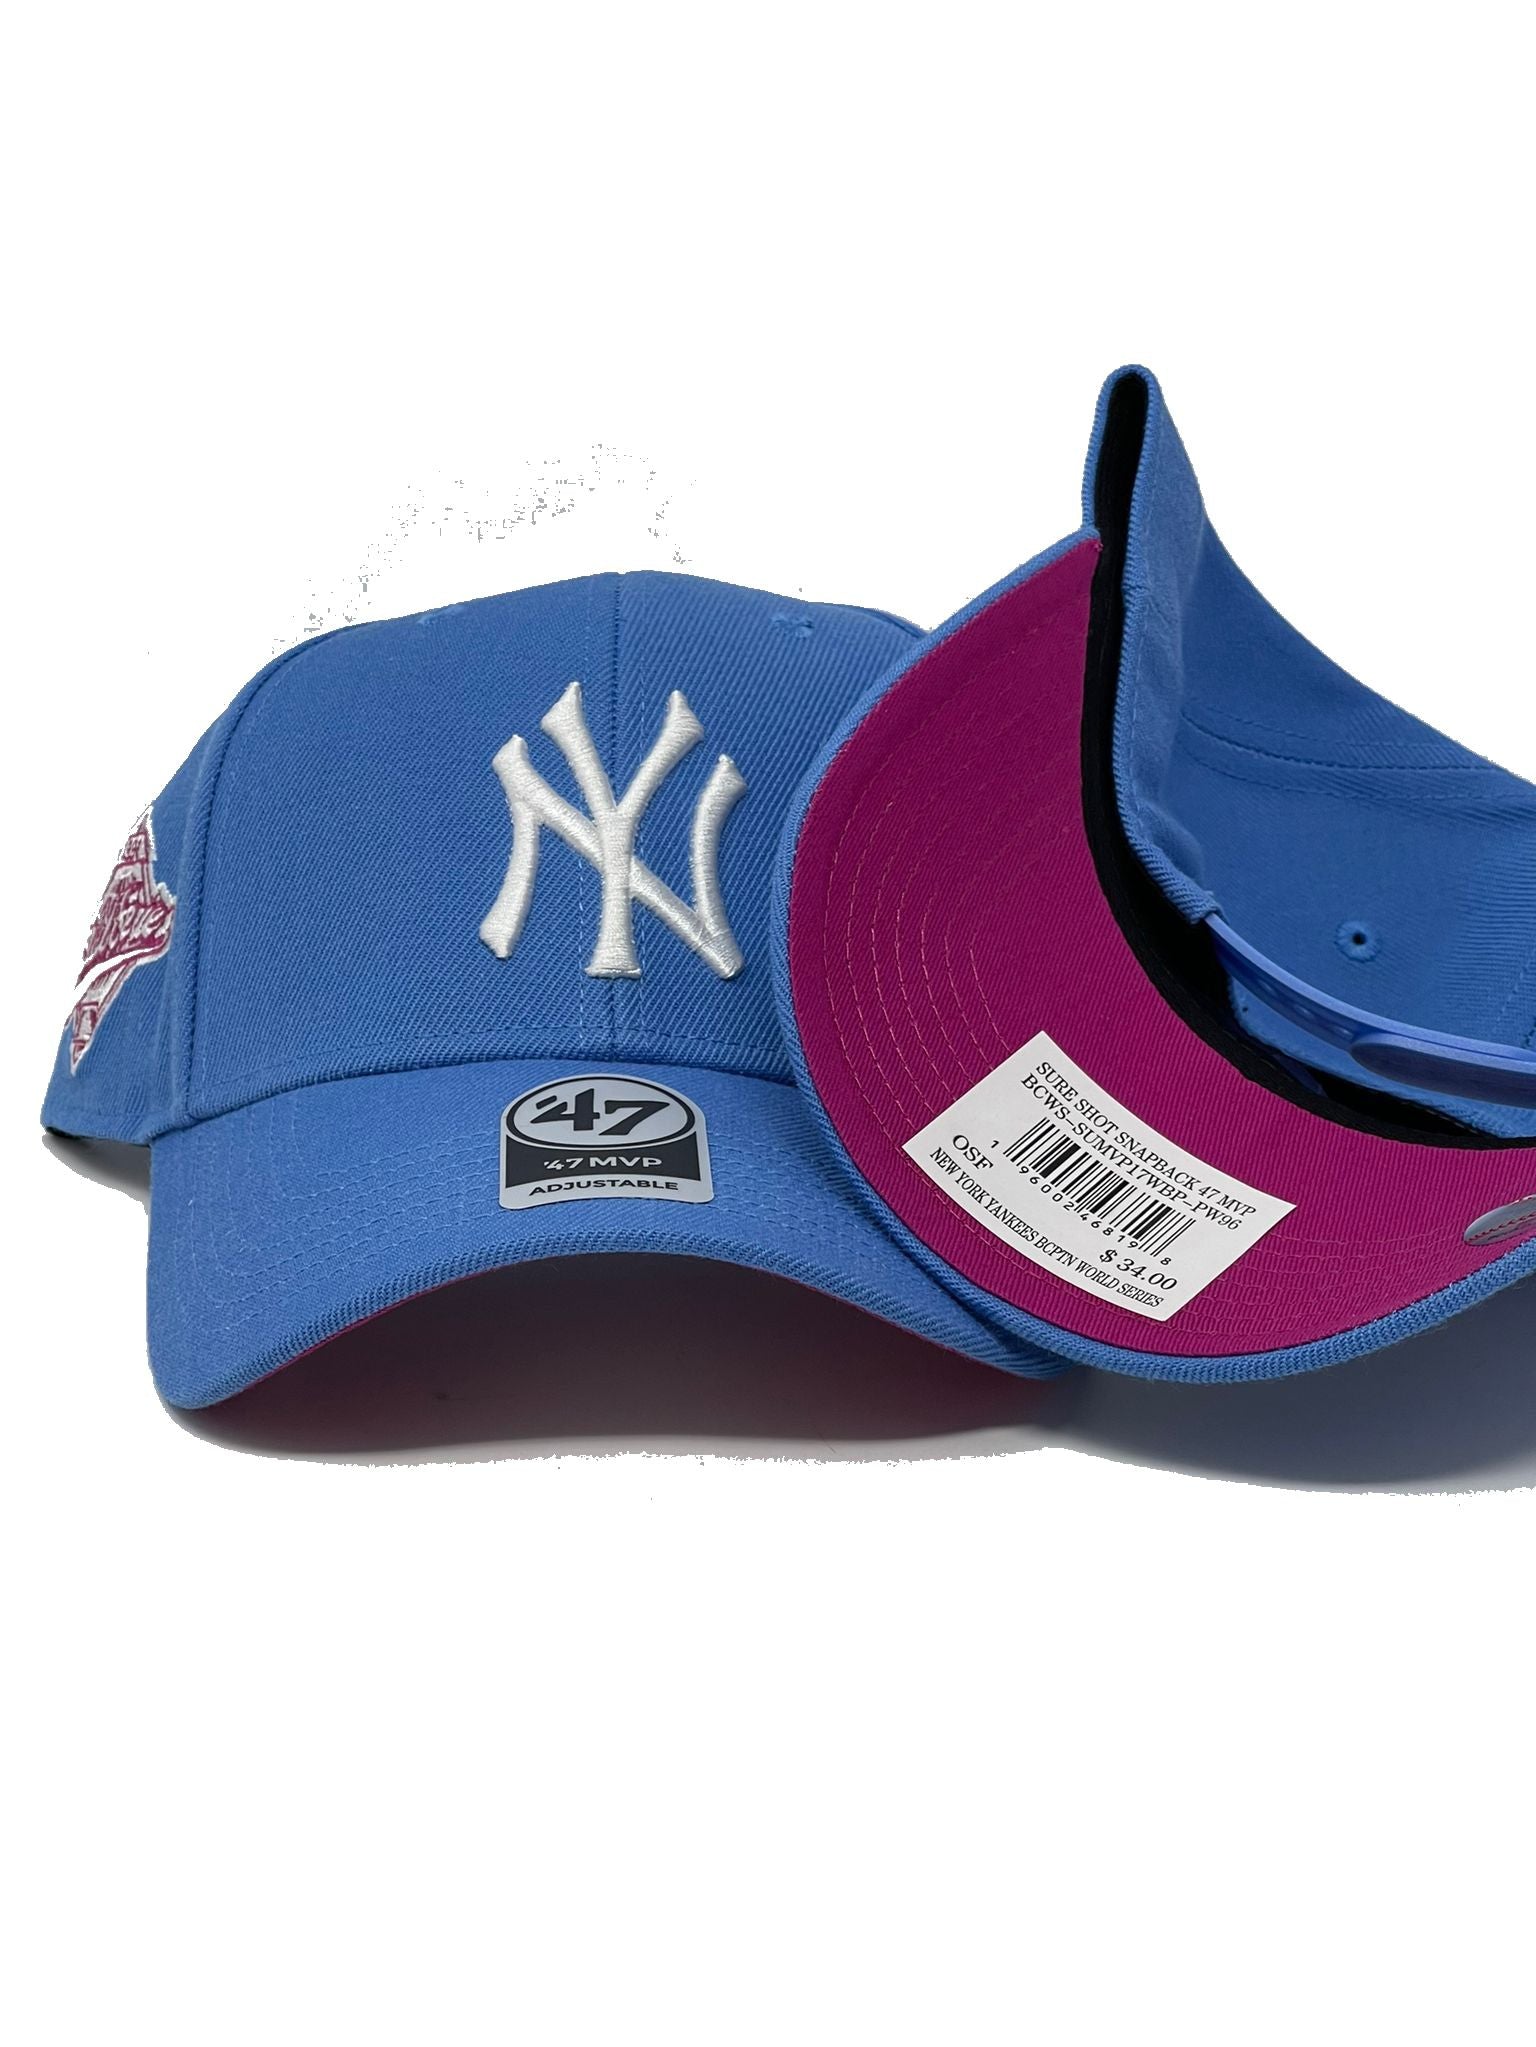 New York Yankees 47 Brand Genuine Merchandise MLB Baseball Adjustable Cap  Hat